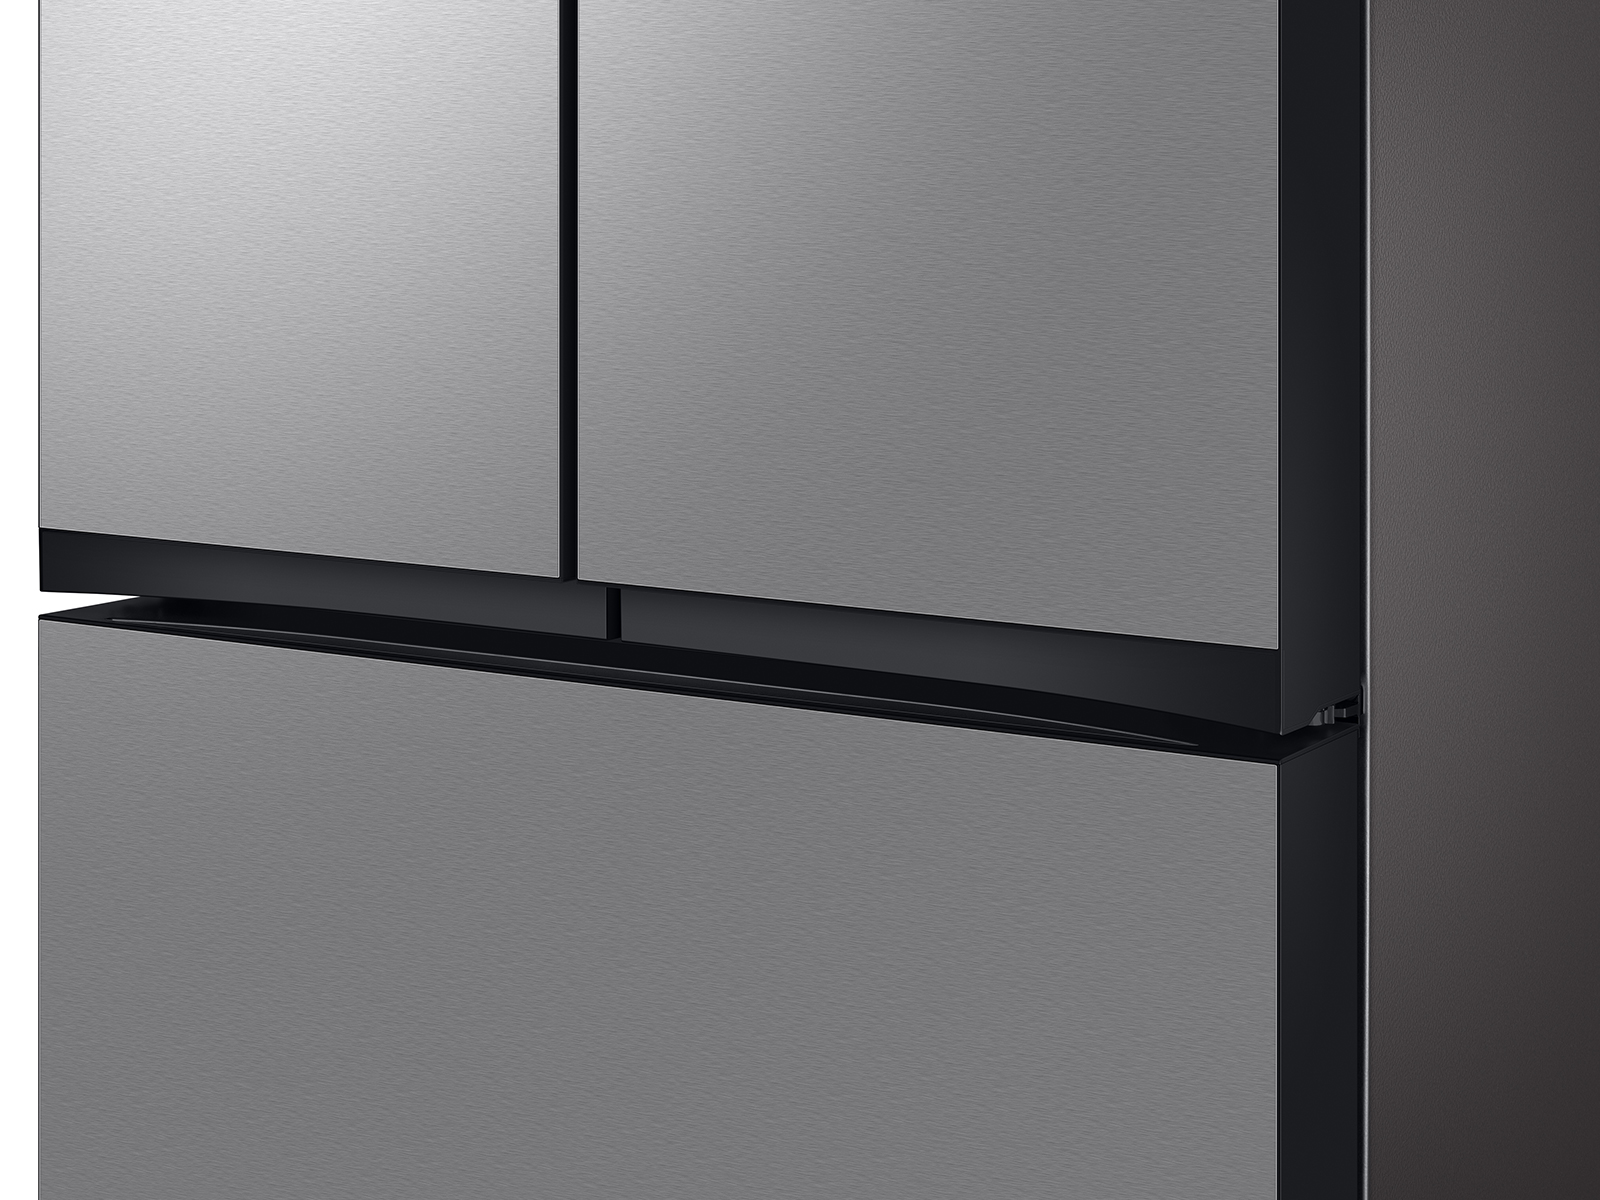 Samsung - Bespoke 24 Cu. ft. Counter Depth 3-Door French Door Refrigerator with Autofill Water Pitcher - White Glass